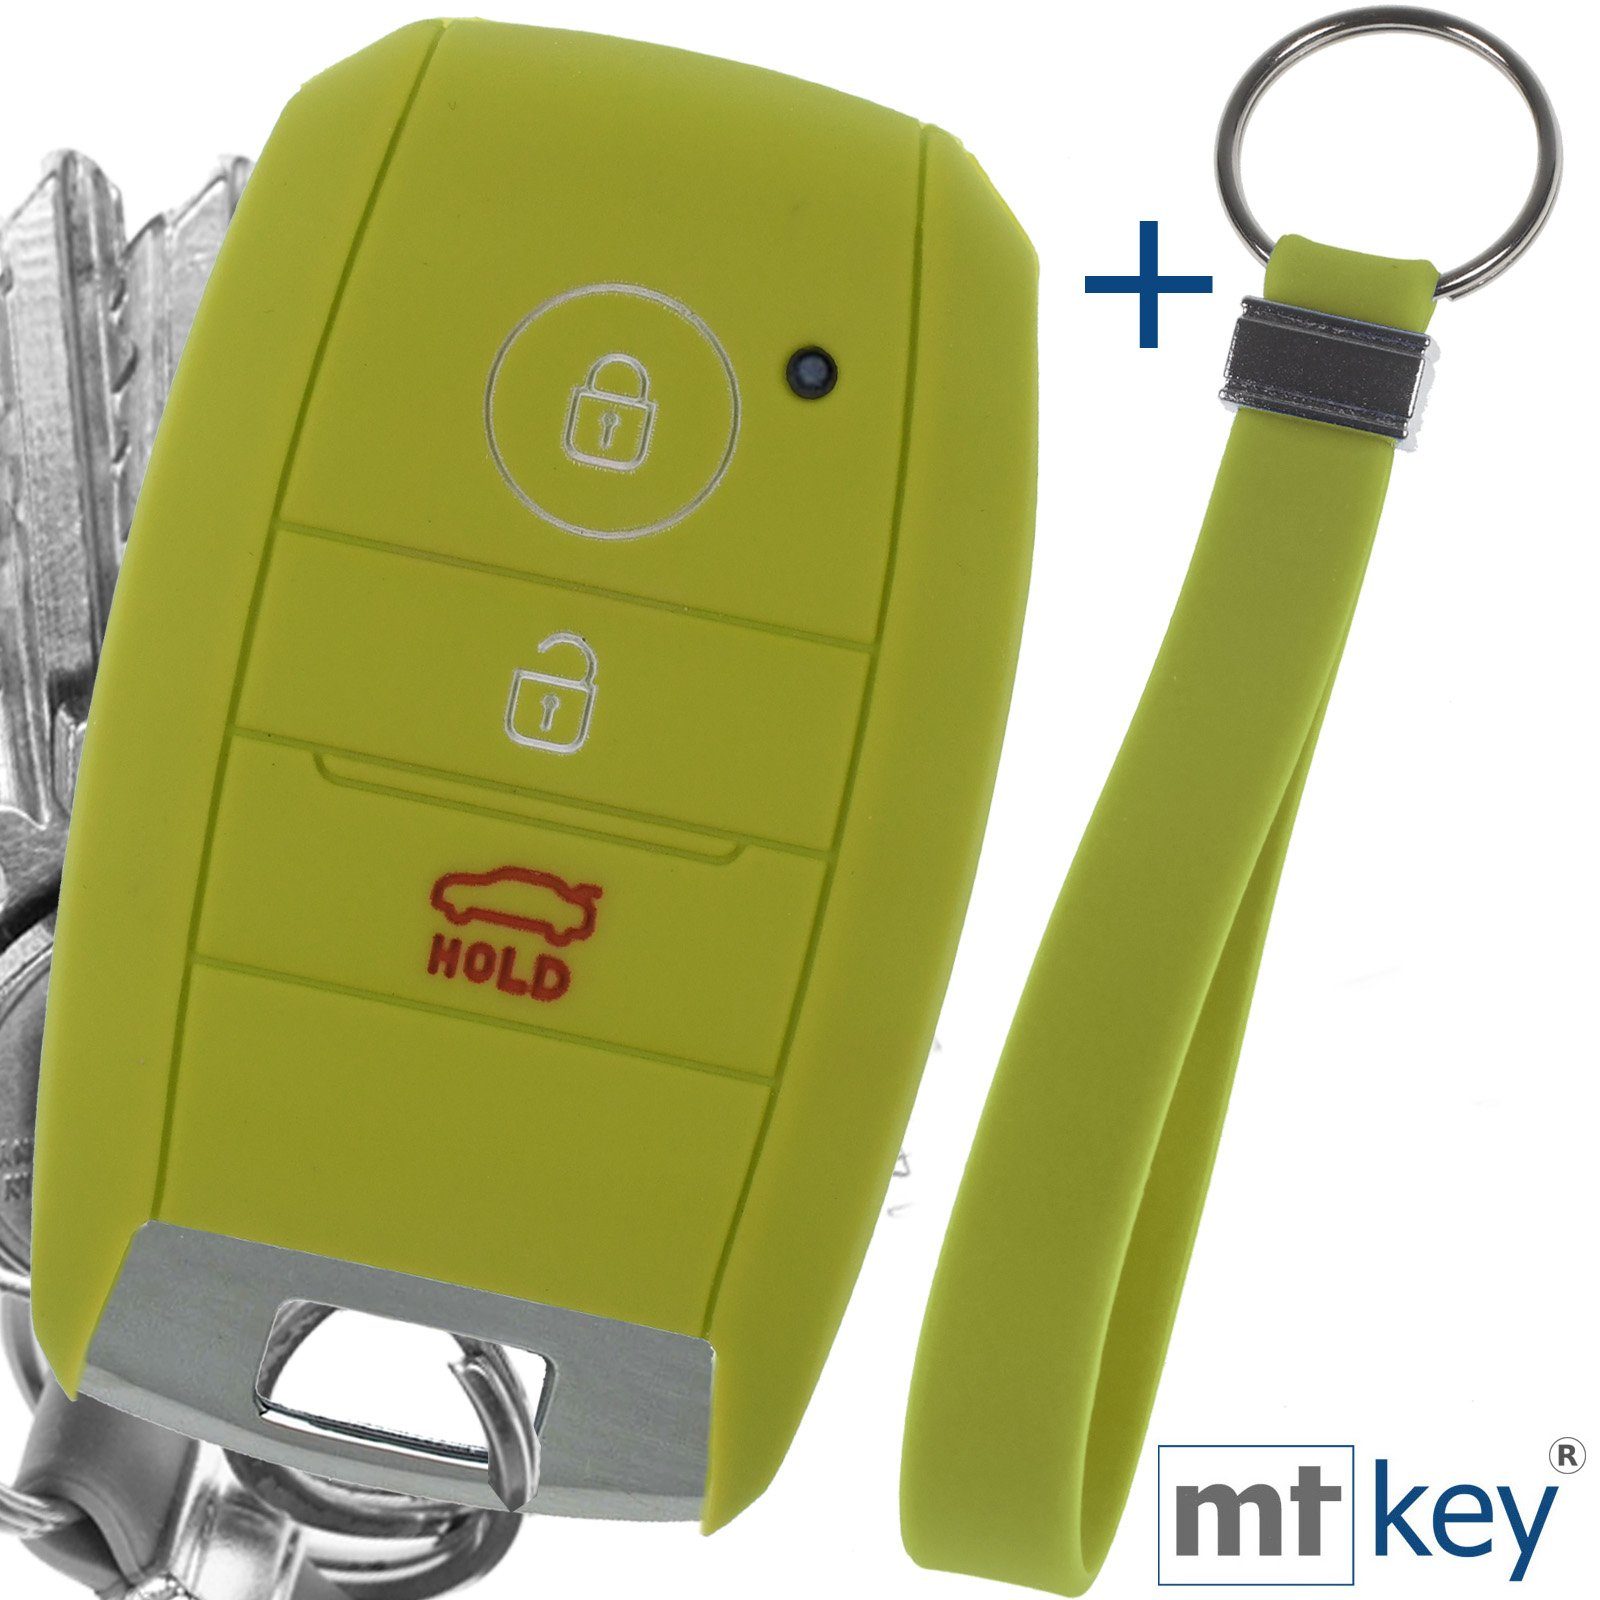 mt-key Schlüsseltasche Autoschlüssel Softcase Silikon Schutzhülle Apfelgrün mit Schlüsselband, für KIA Picantio Rio Ceed Soul Sportage Stonic 3 Tasten KEYLESS